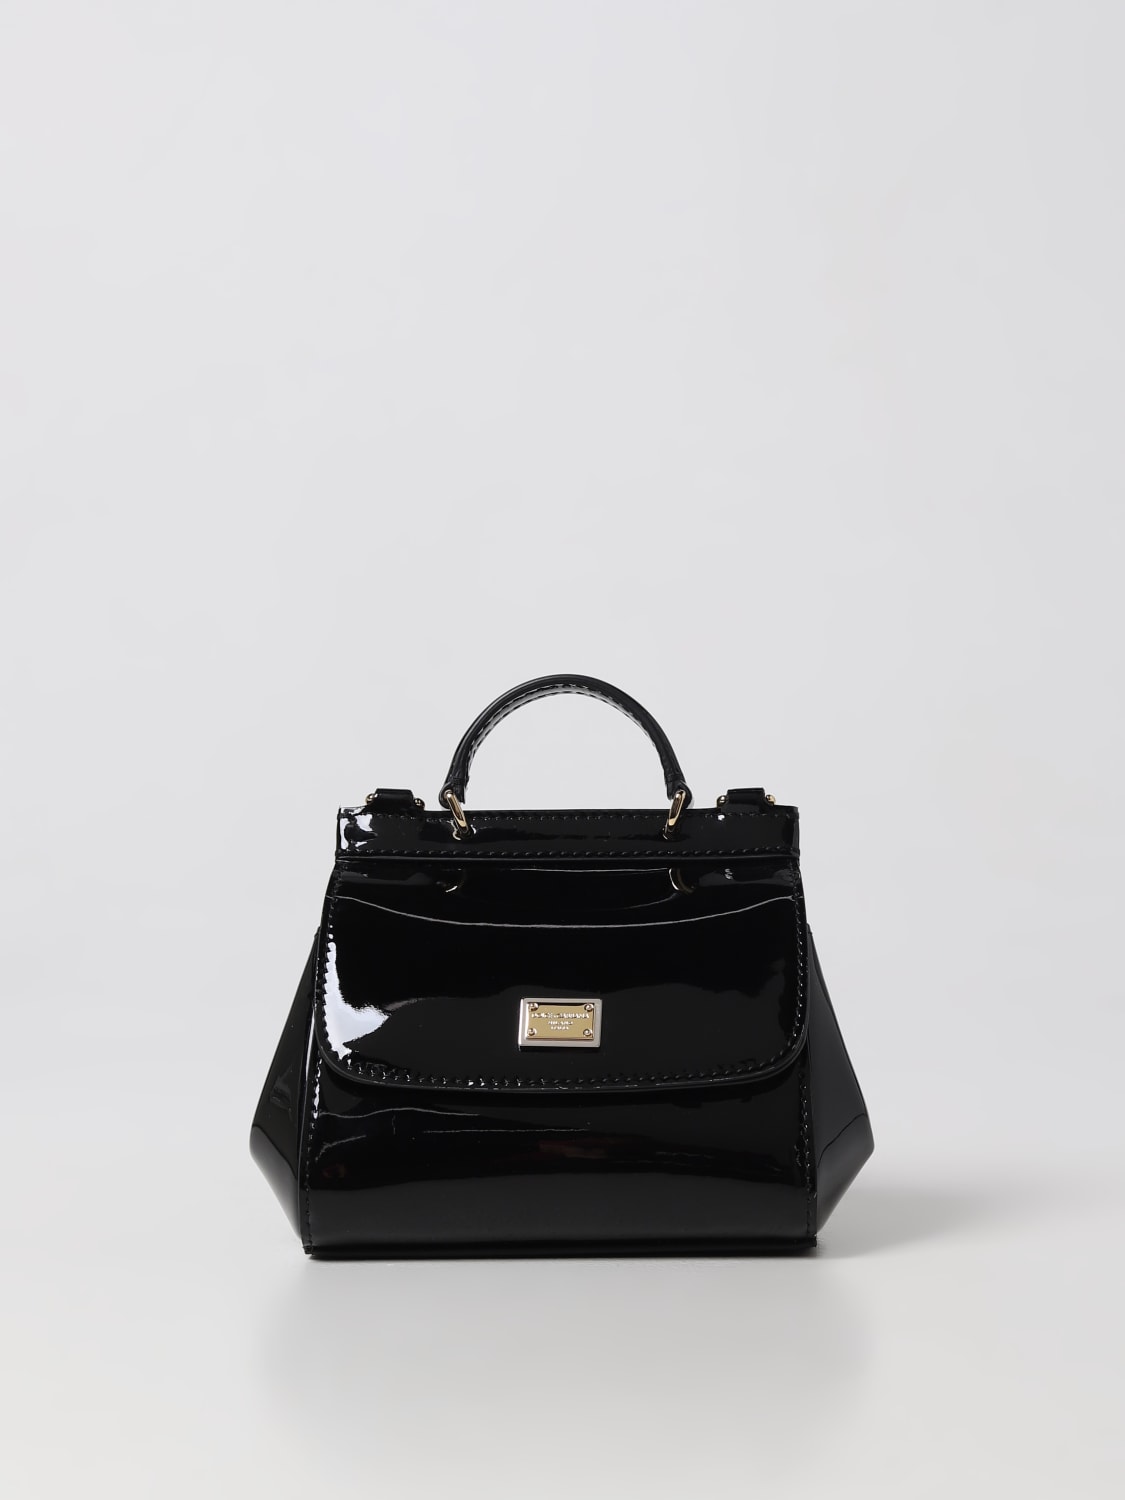 DOLCE & GABBANA Women's Sicily Bag Leather in Black